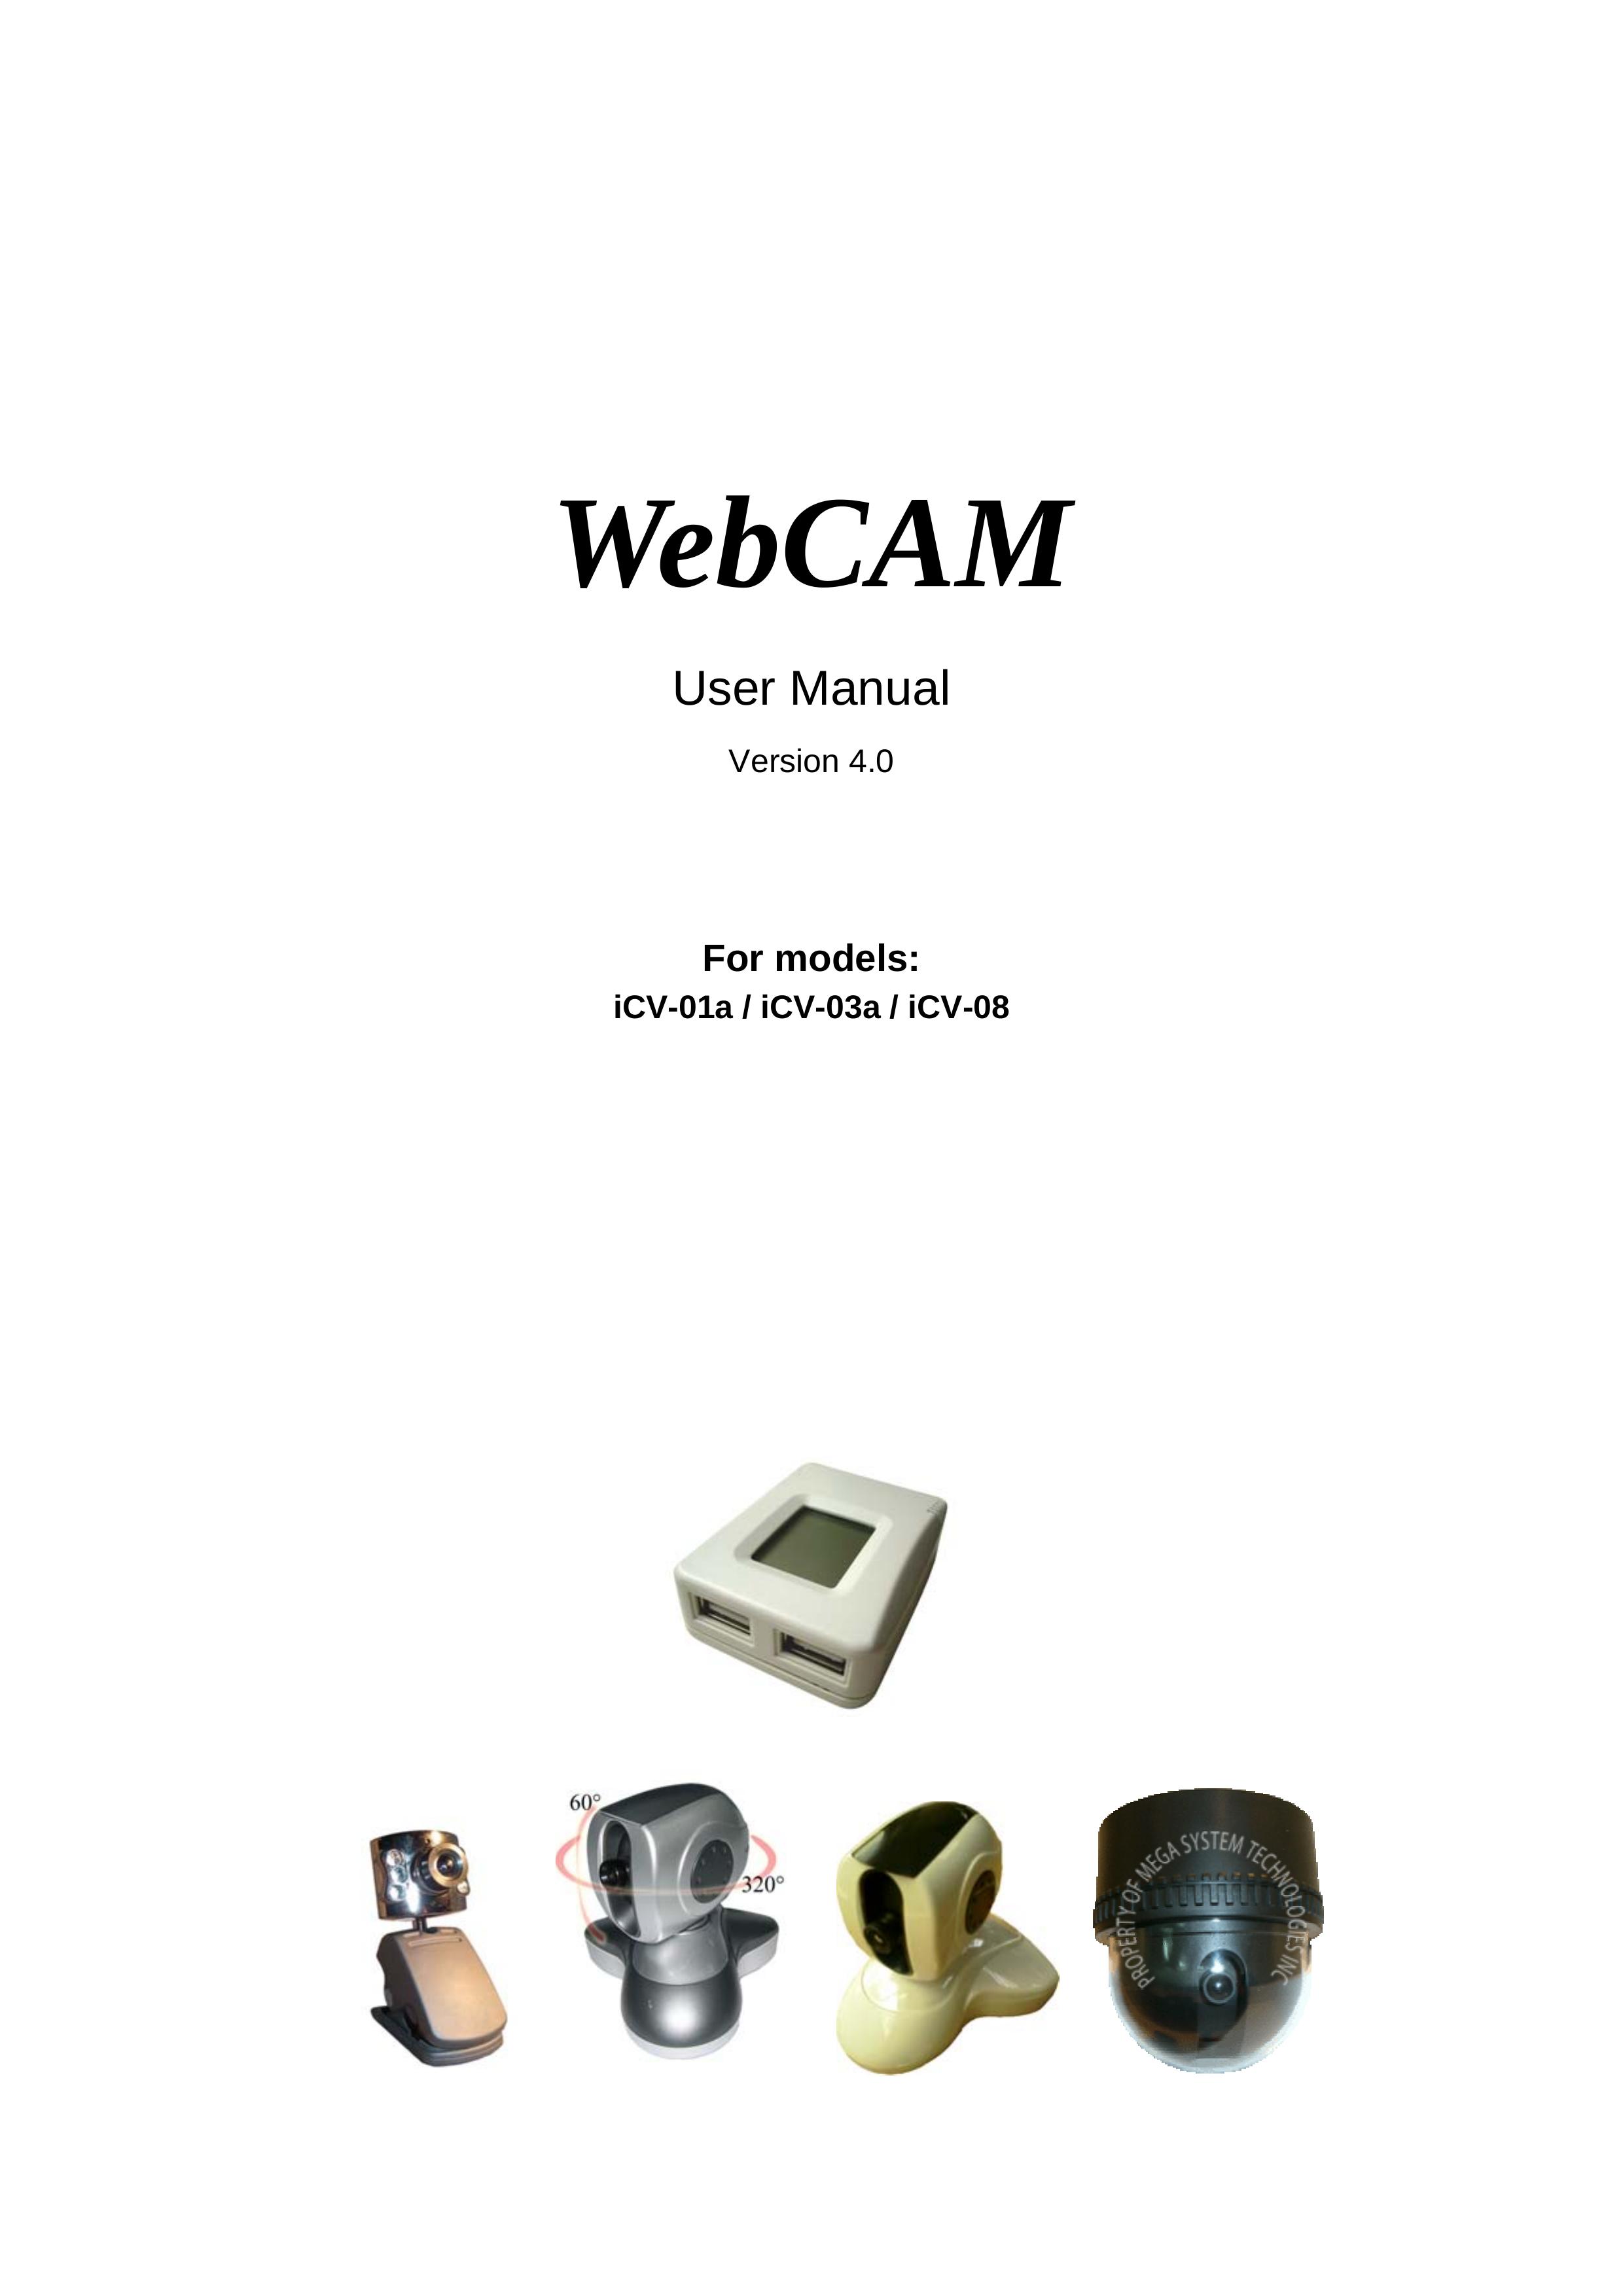 3Com iCV-08 Digital Camera User Manual